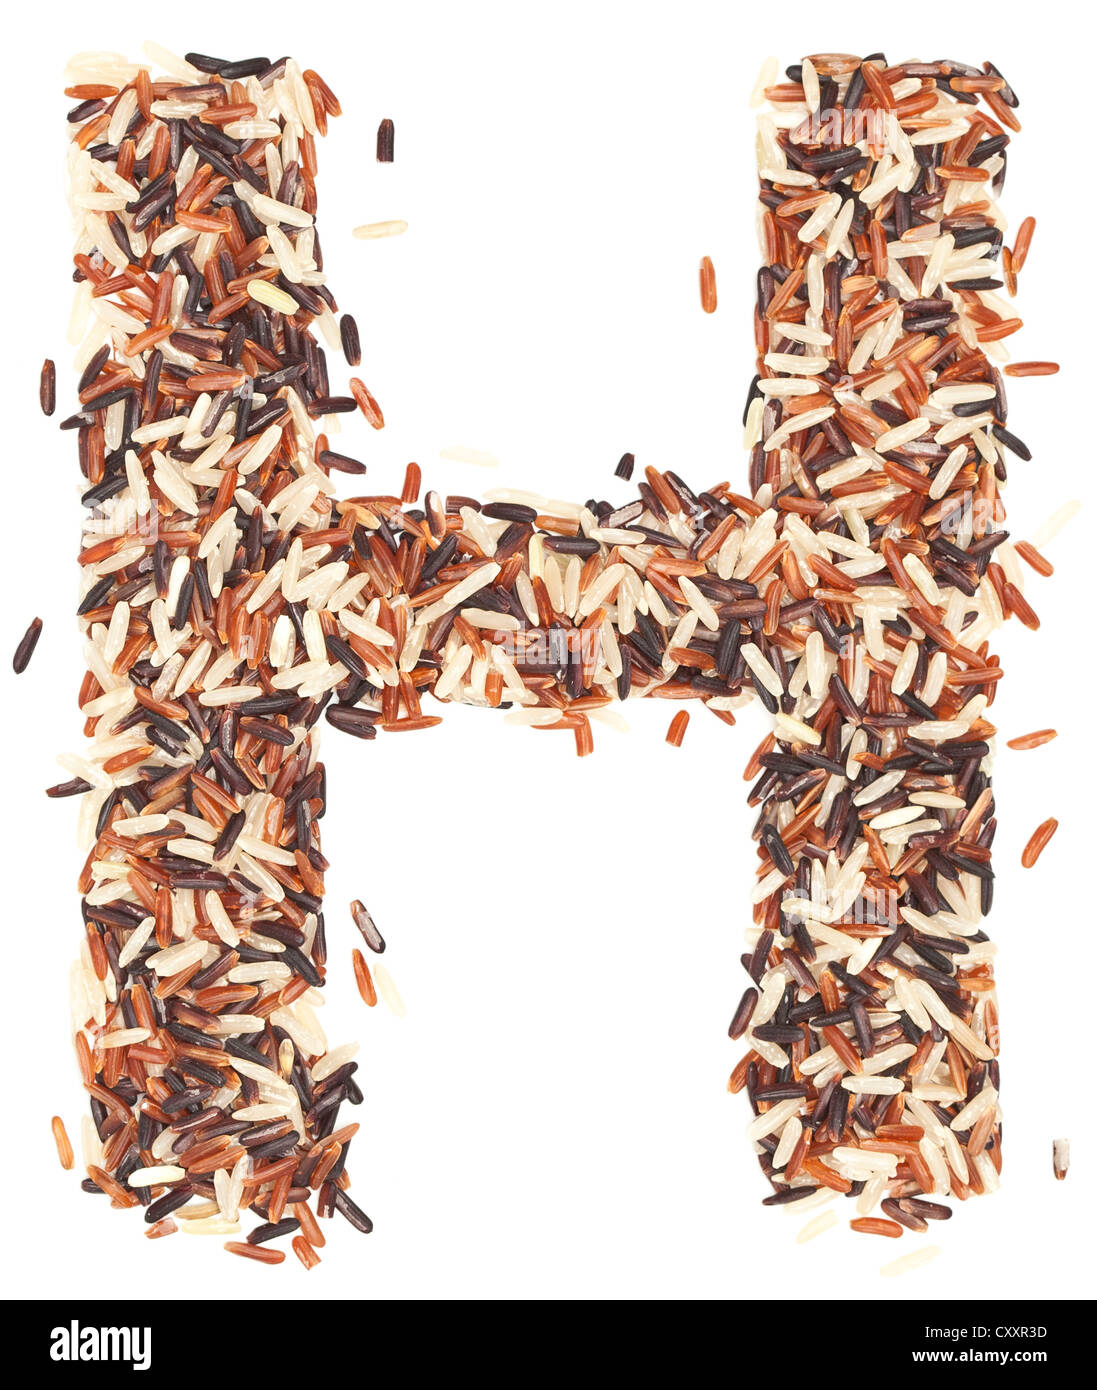 H, Alphabet from Organic Whole grain Rice Stock Photo